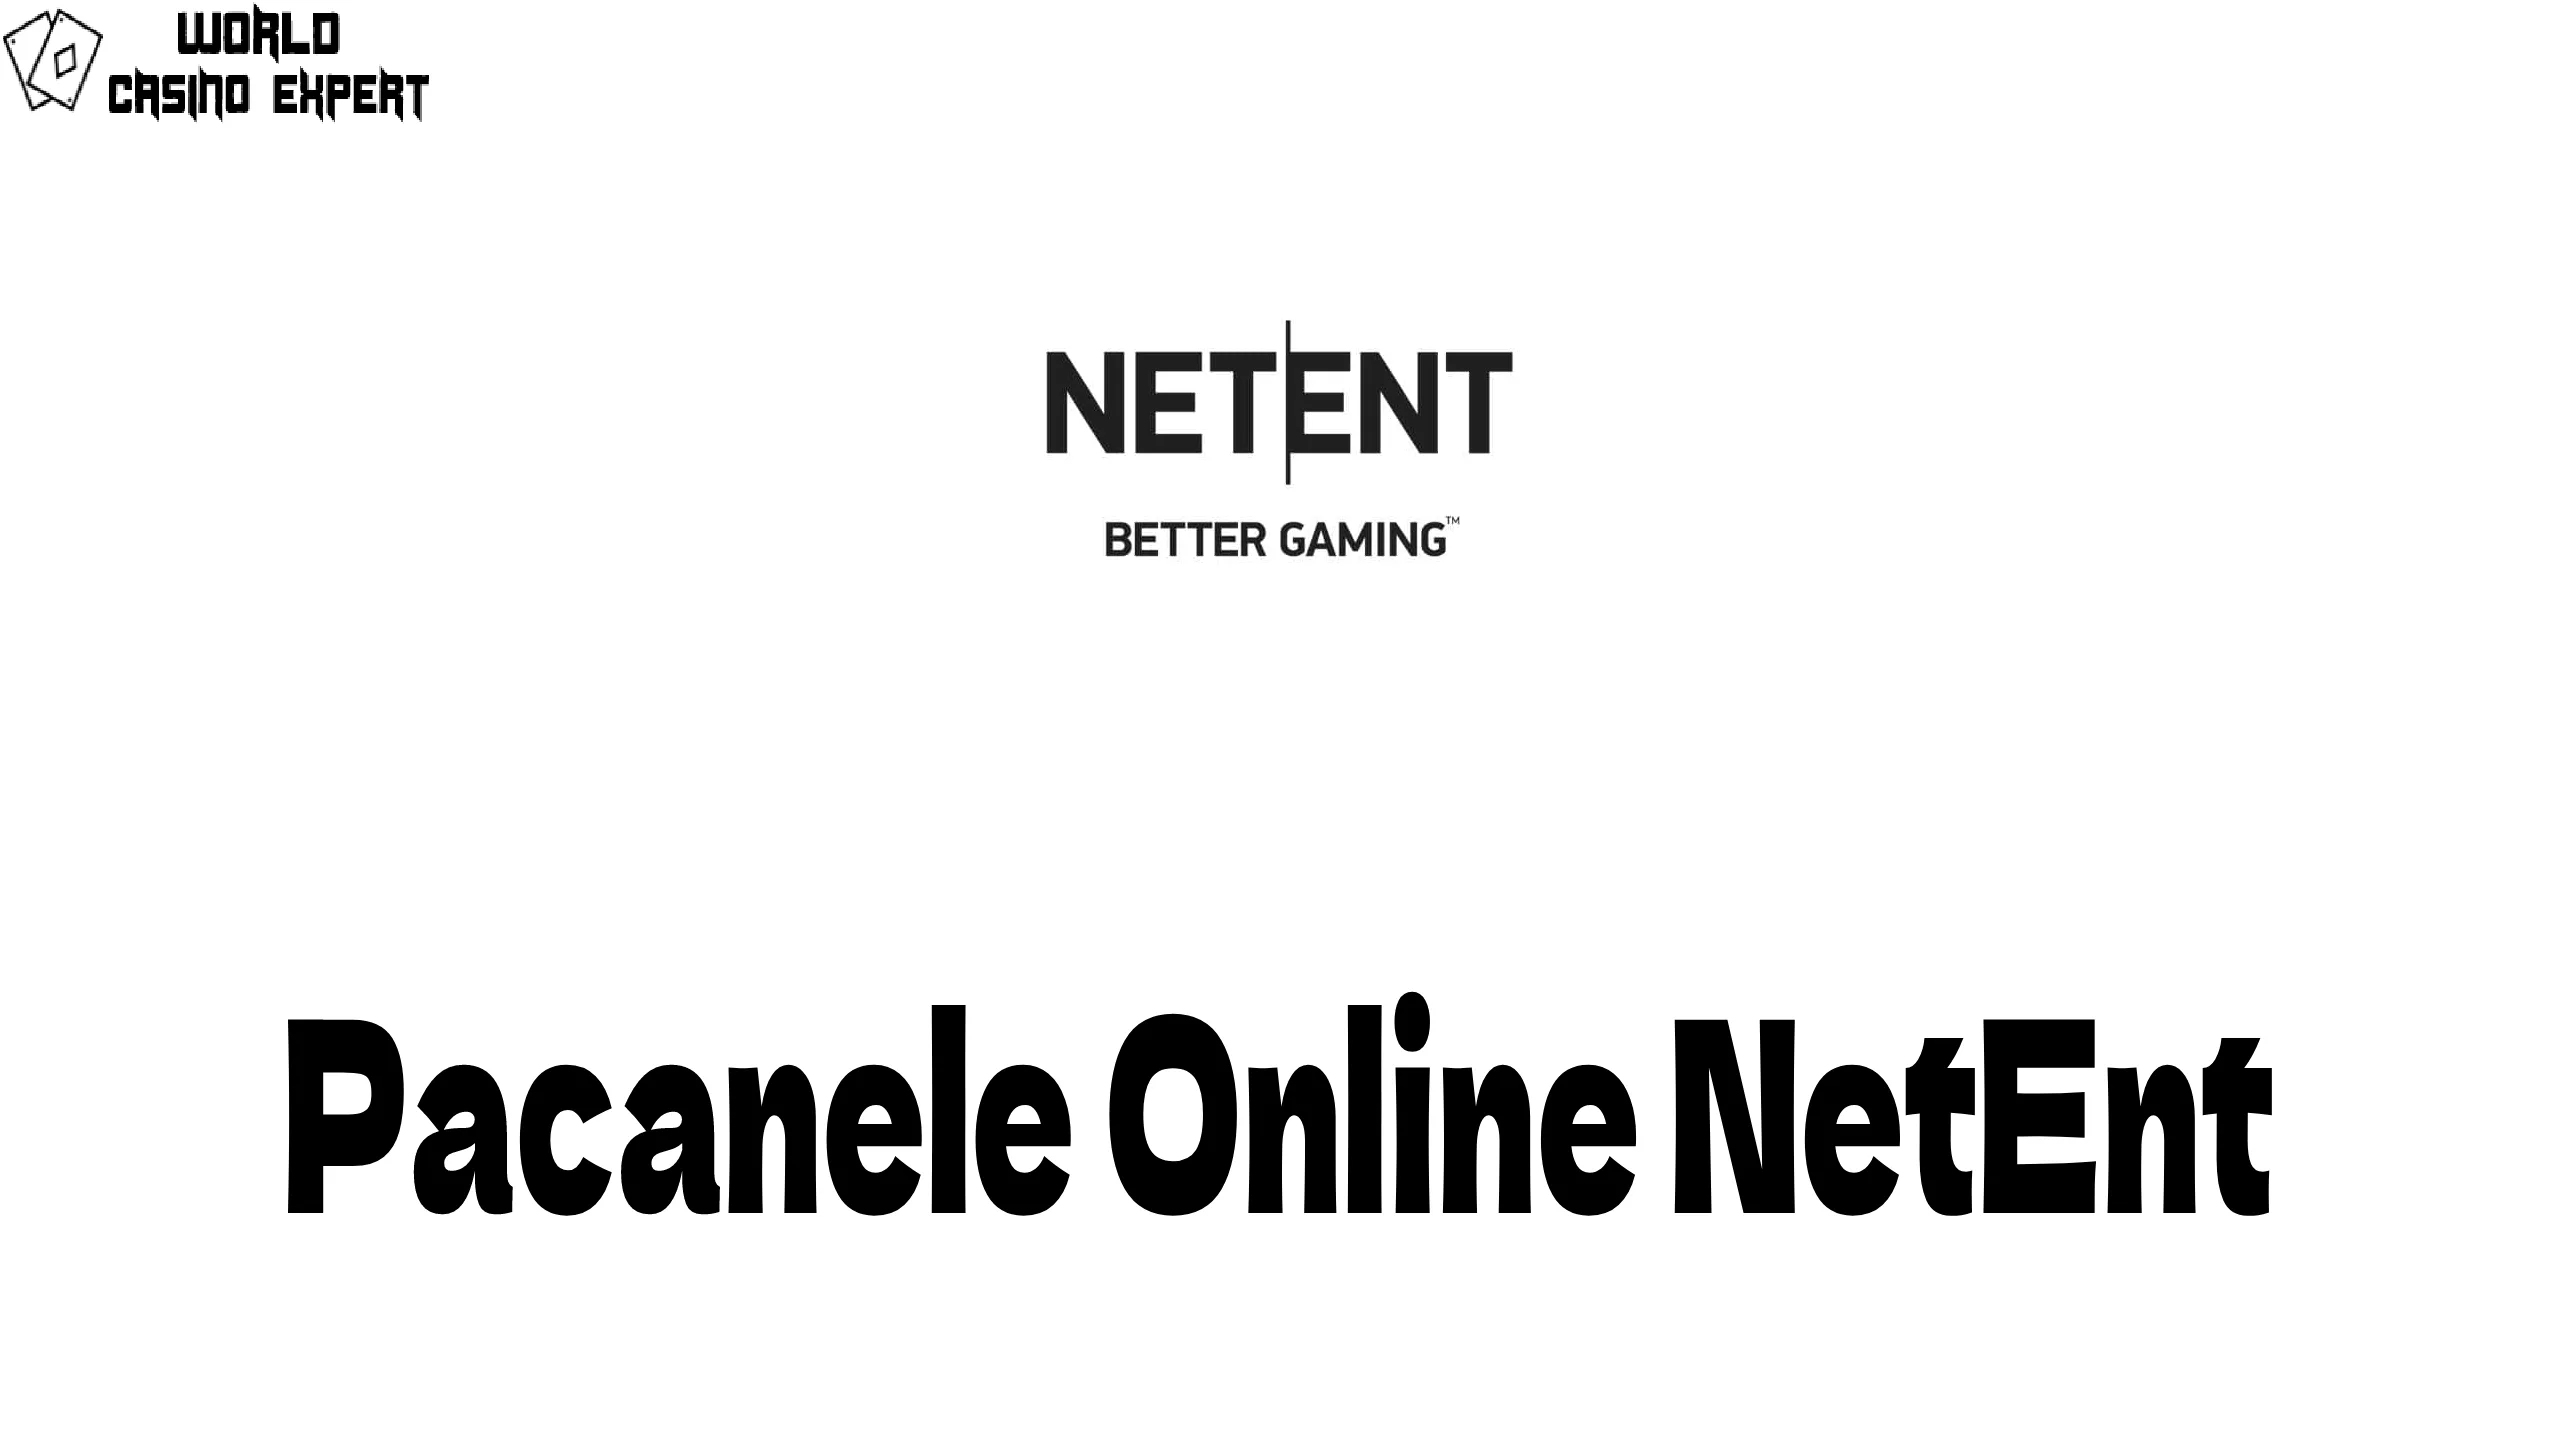 Pacanele Online NetEnt | World Casino Expert Romania